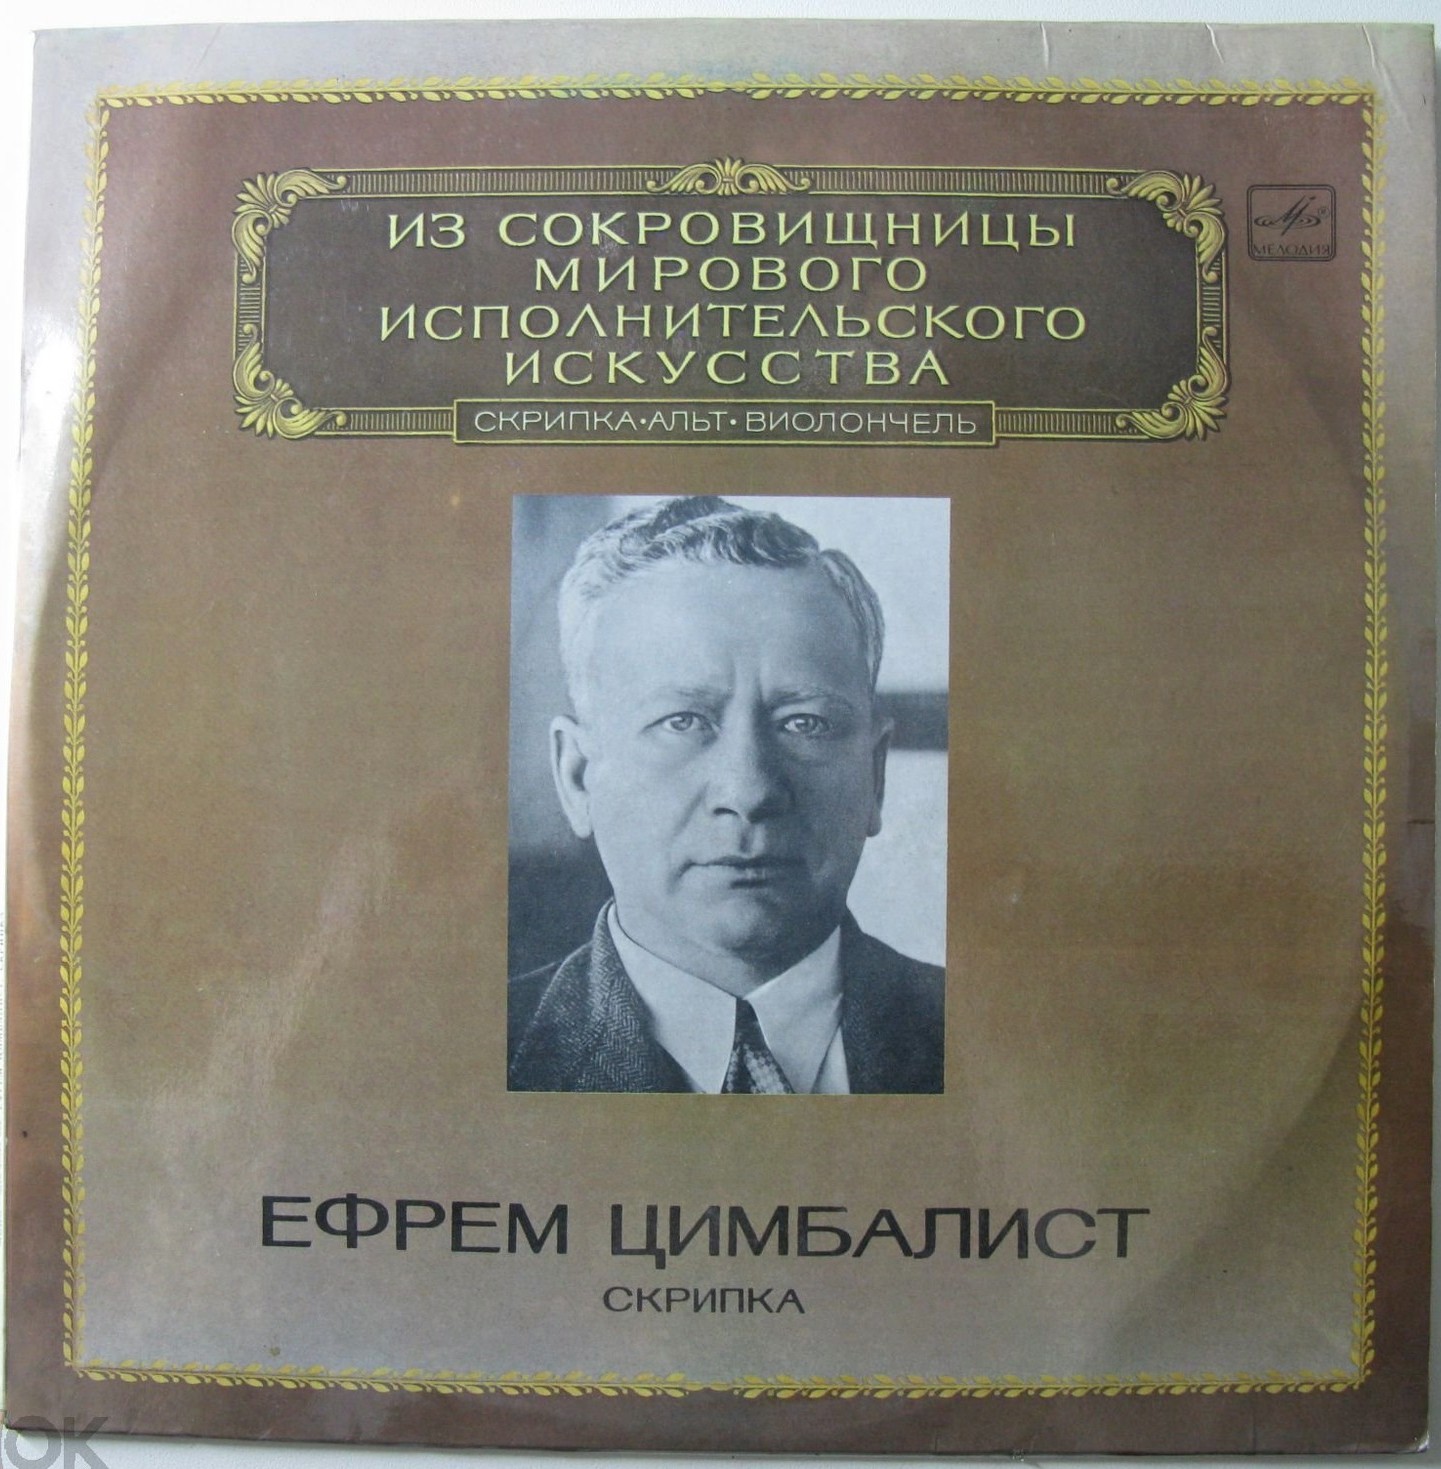 Ефрем Цимбалист (скрипка)